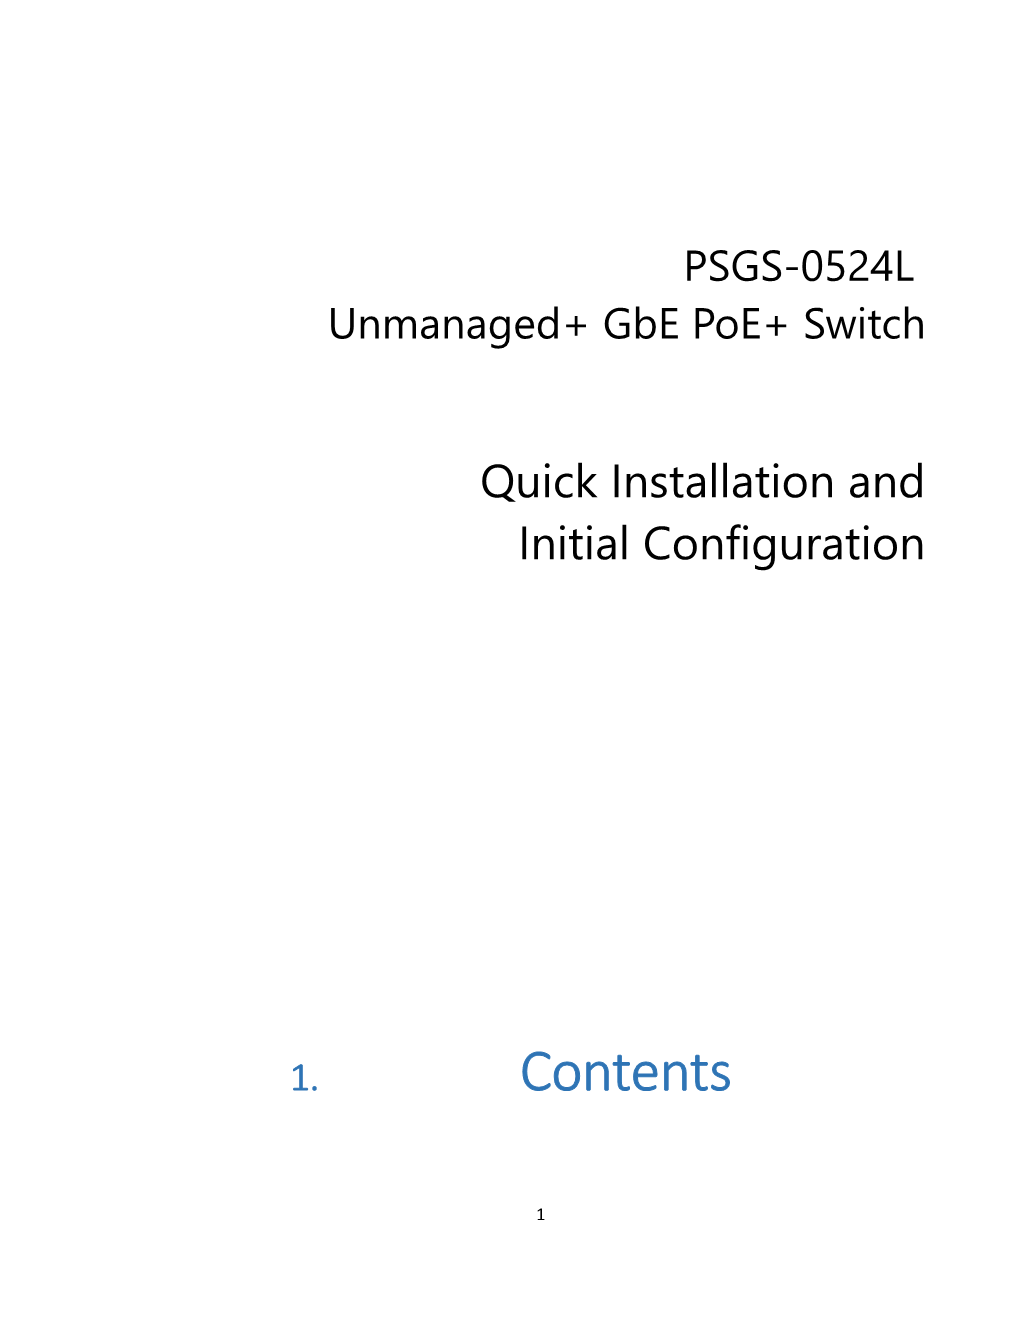 Unmanaged+ Gbepoe+ Switch